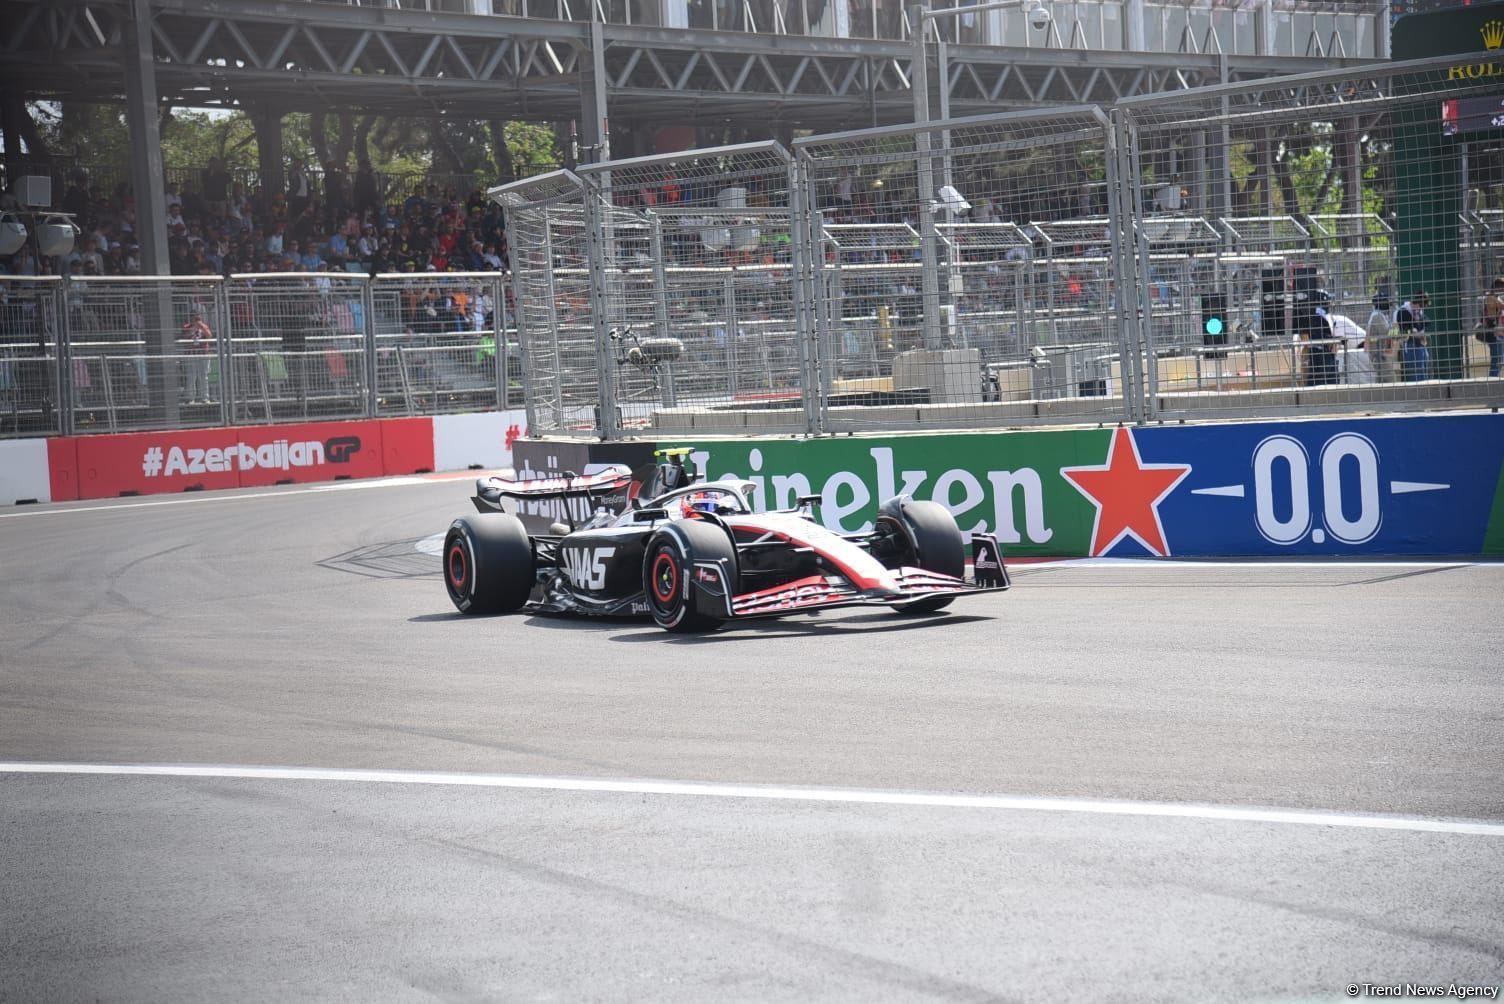 Main race of Formula 1 Azerbaijan Grand Prix kicks off